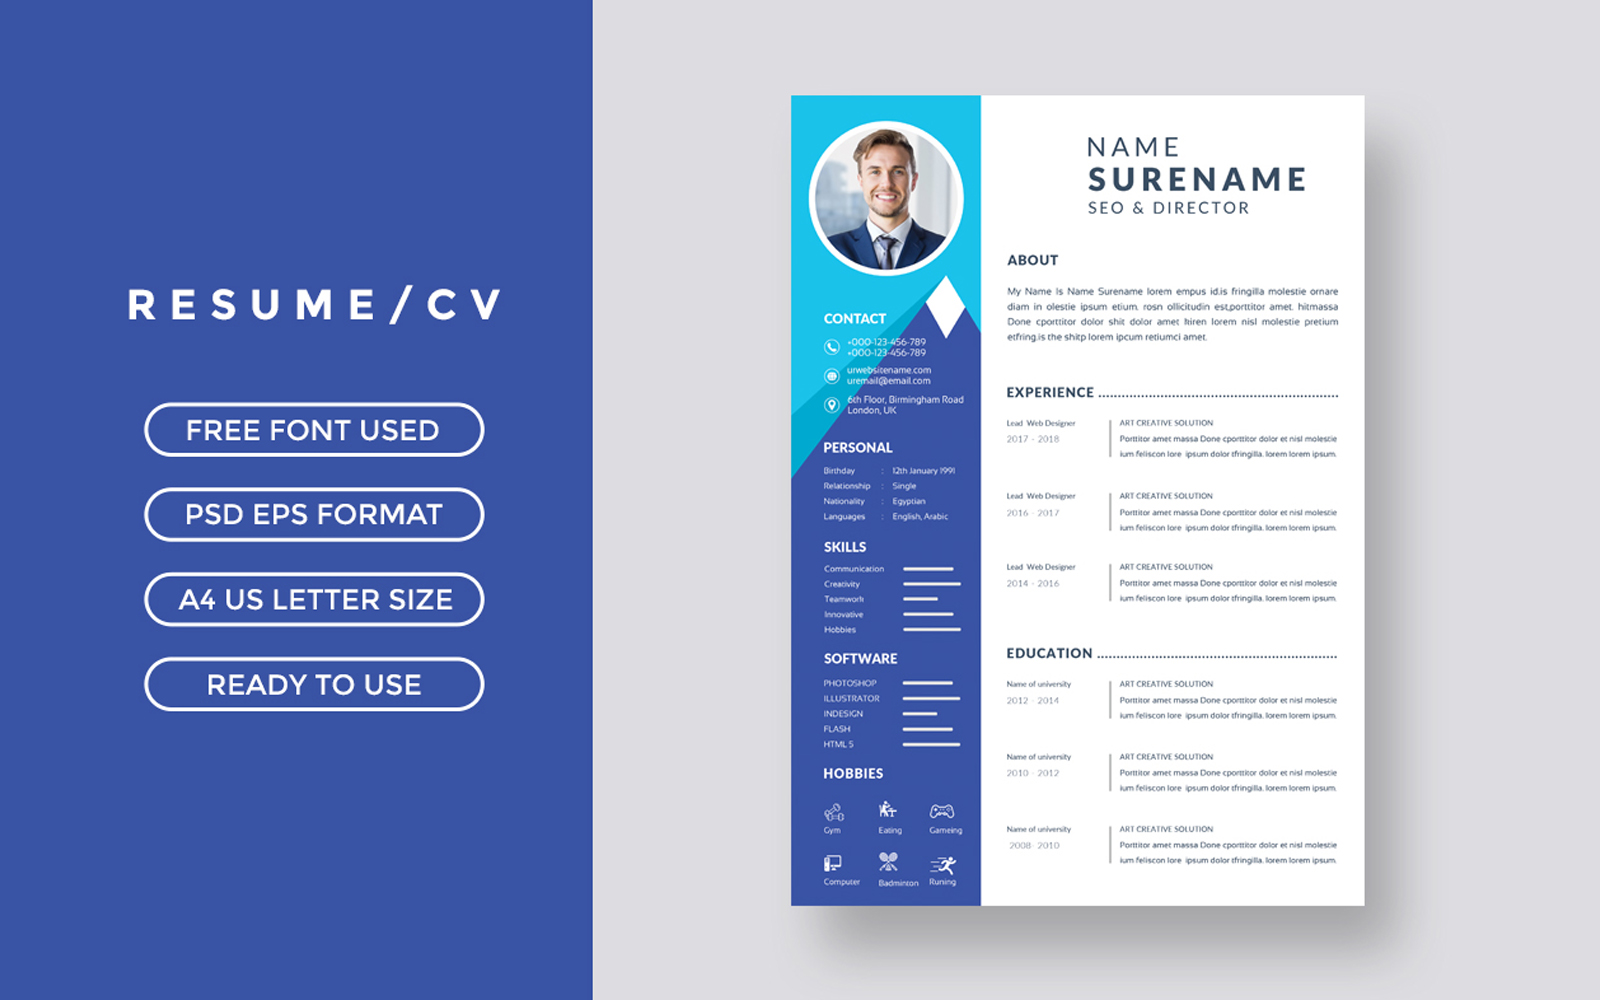 Beautiful CV / Resume template - elegant stylish layout